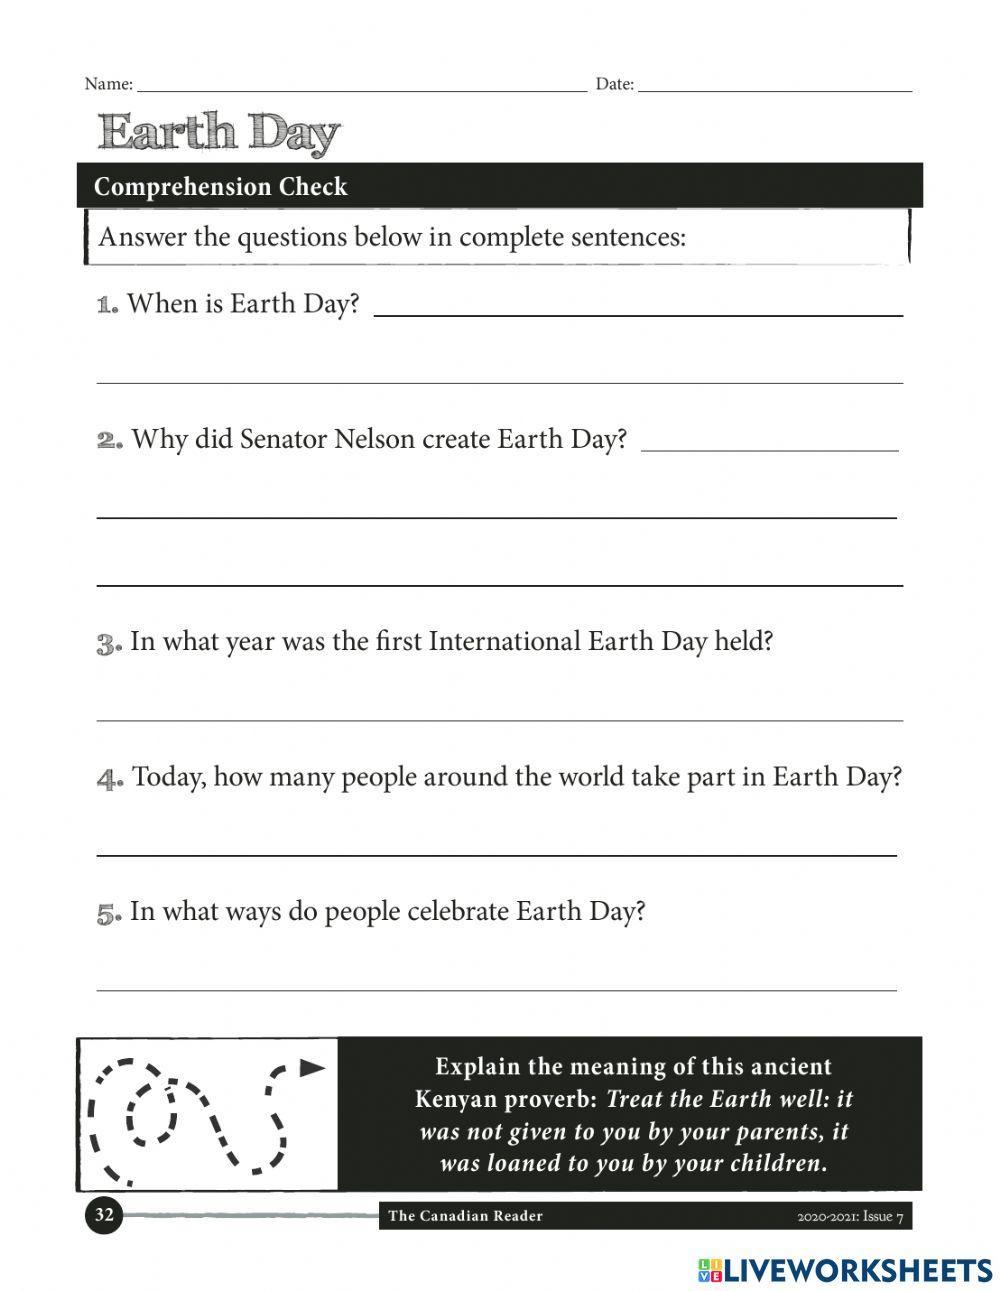 Earth Day comic